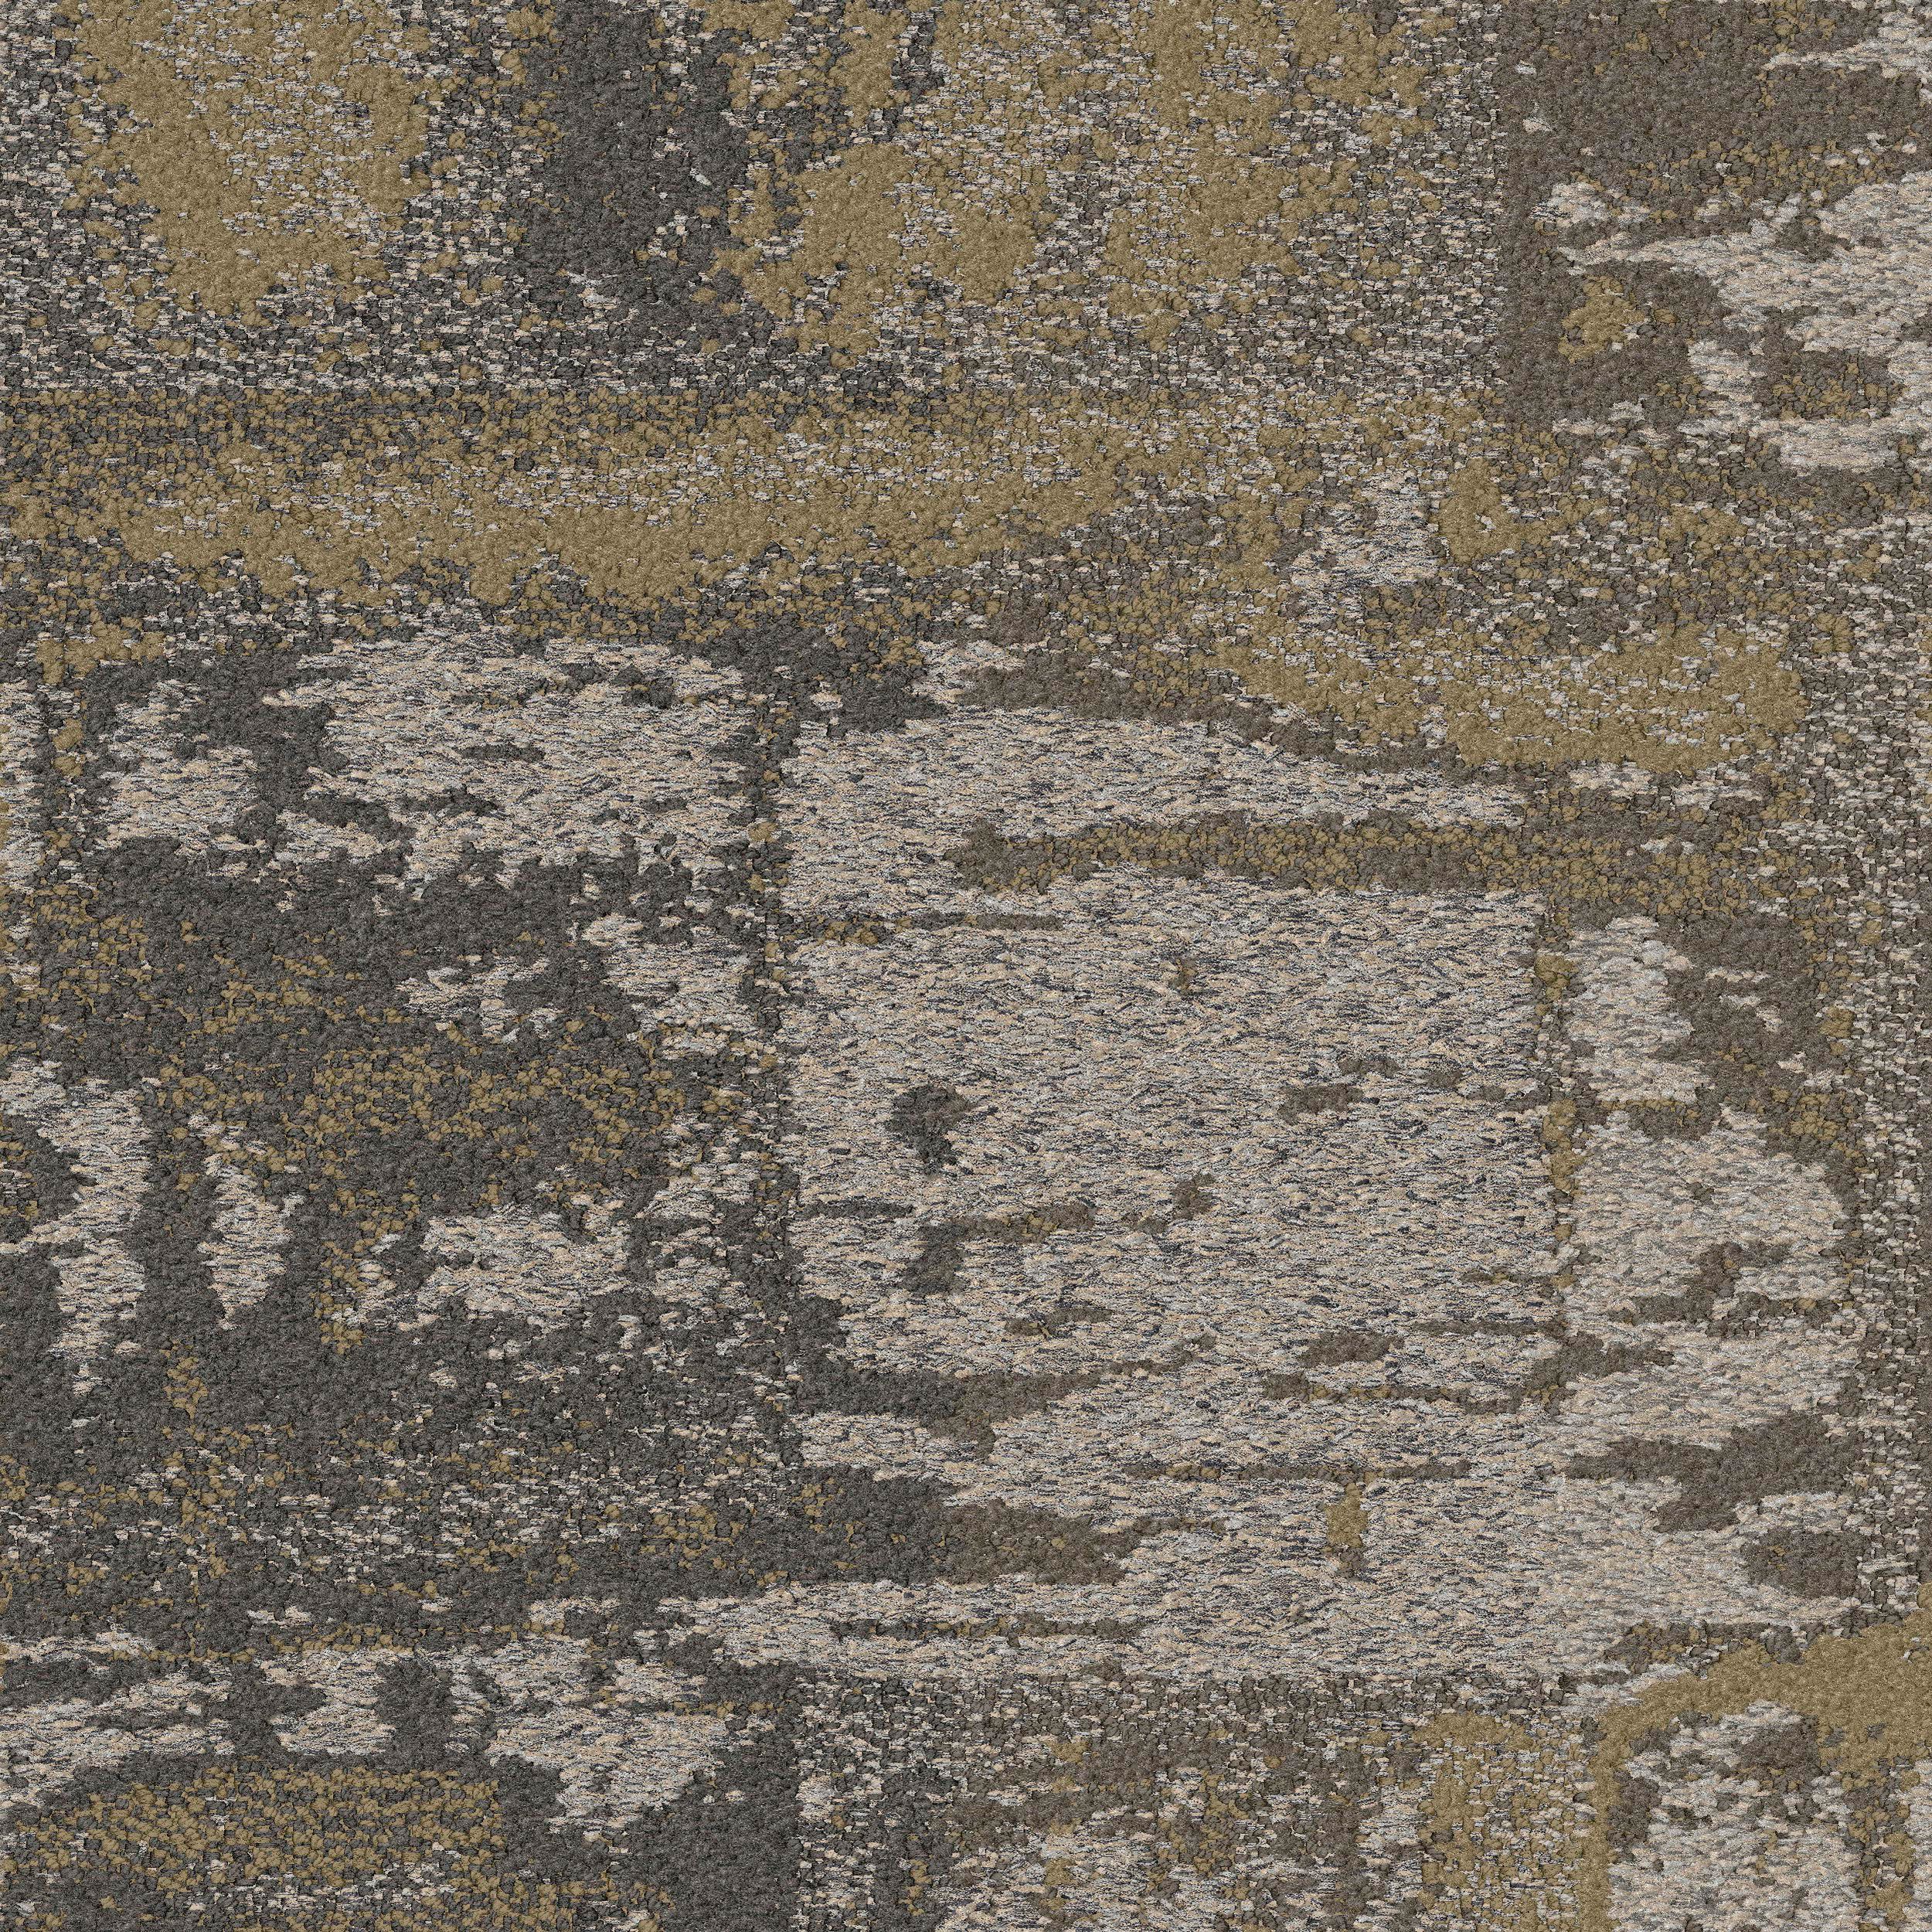 A Peeling Carpet Tile In Patina numéro d’image 2